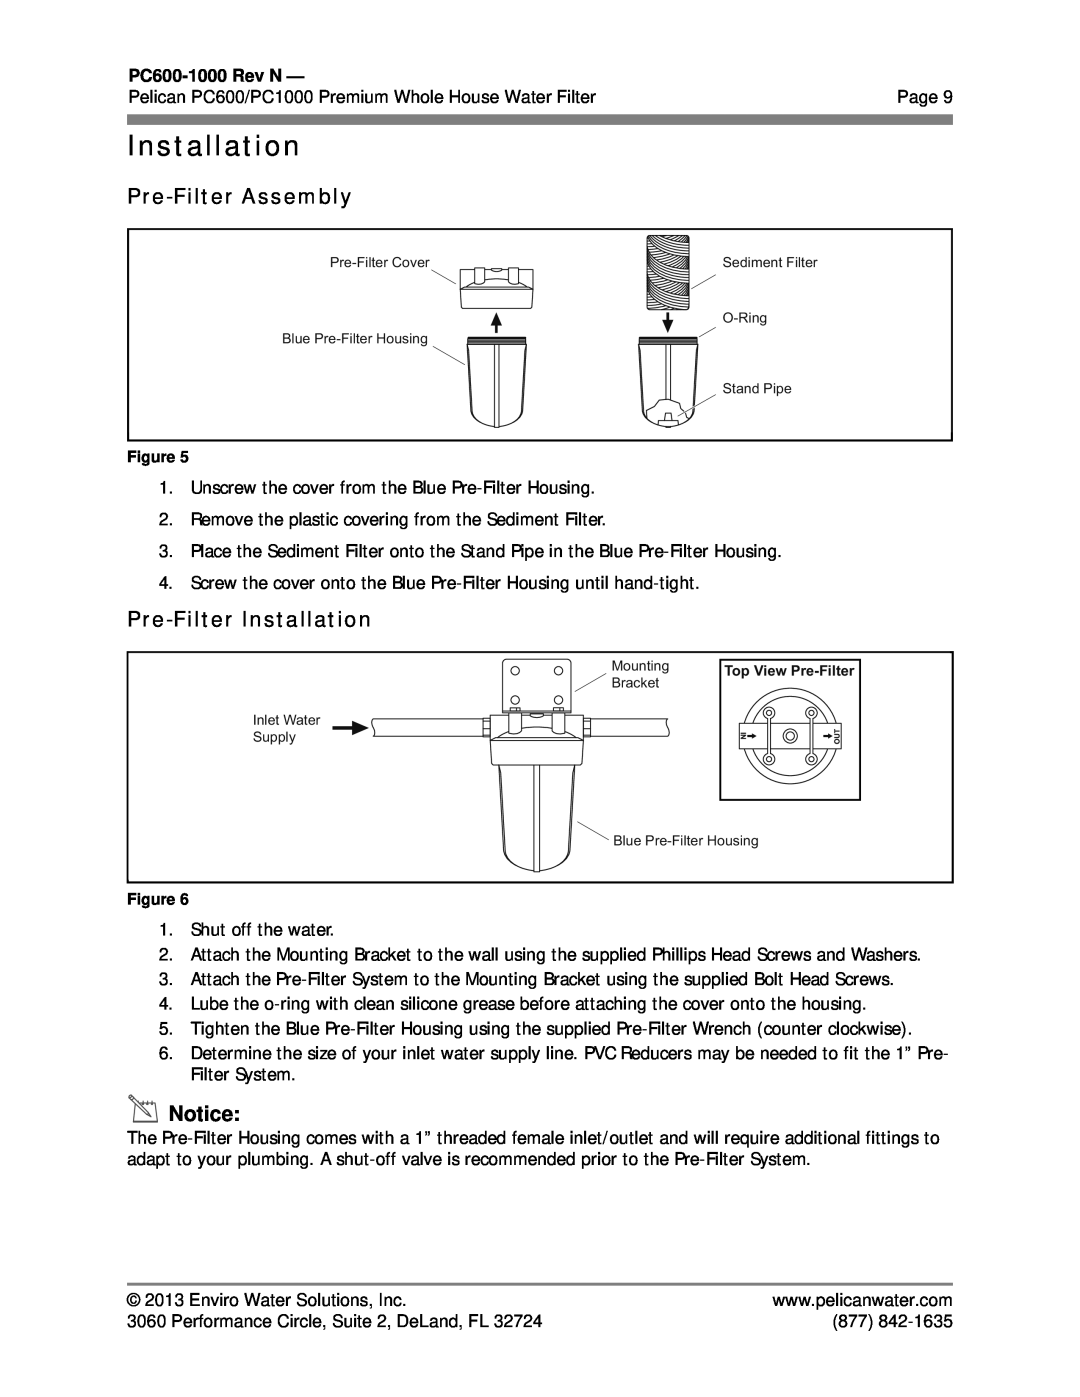 Pelican manual Pre-FilterAssembly, Pre-FilterInstallation, PC600-1000Rev N, Page 